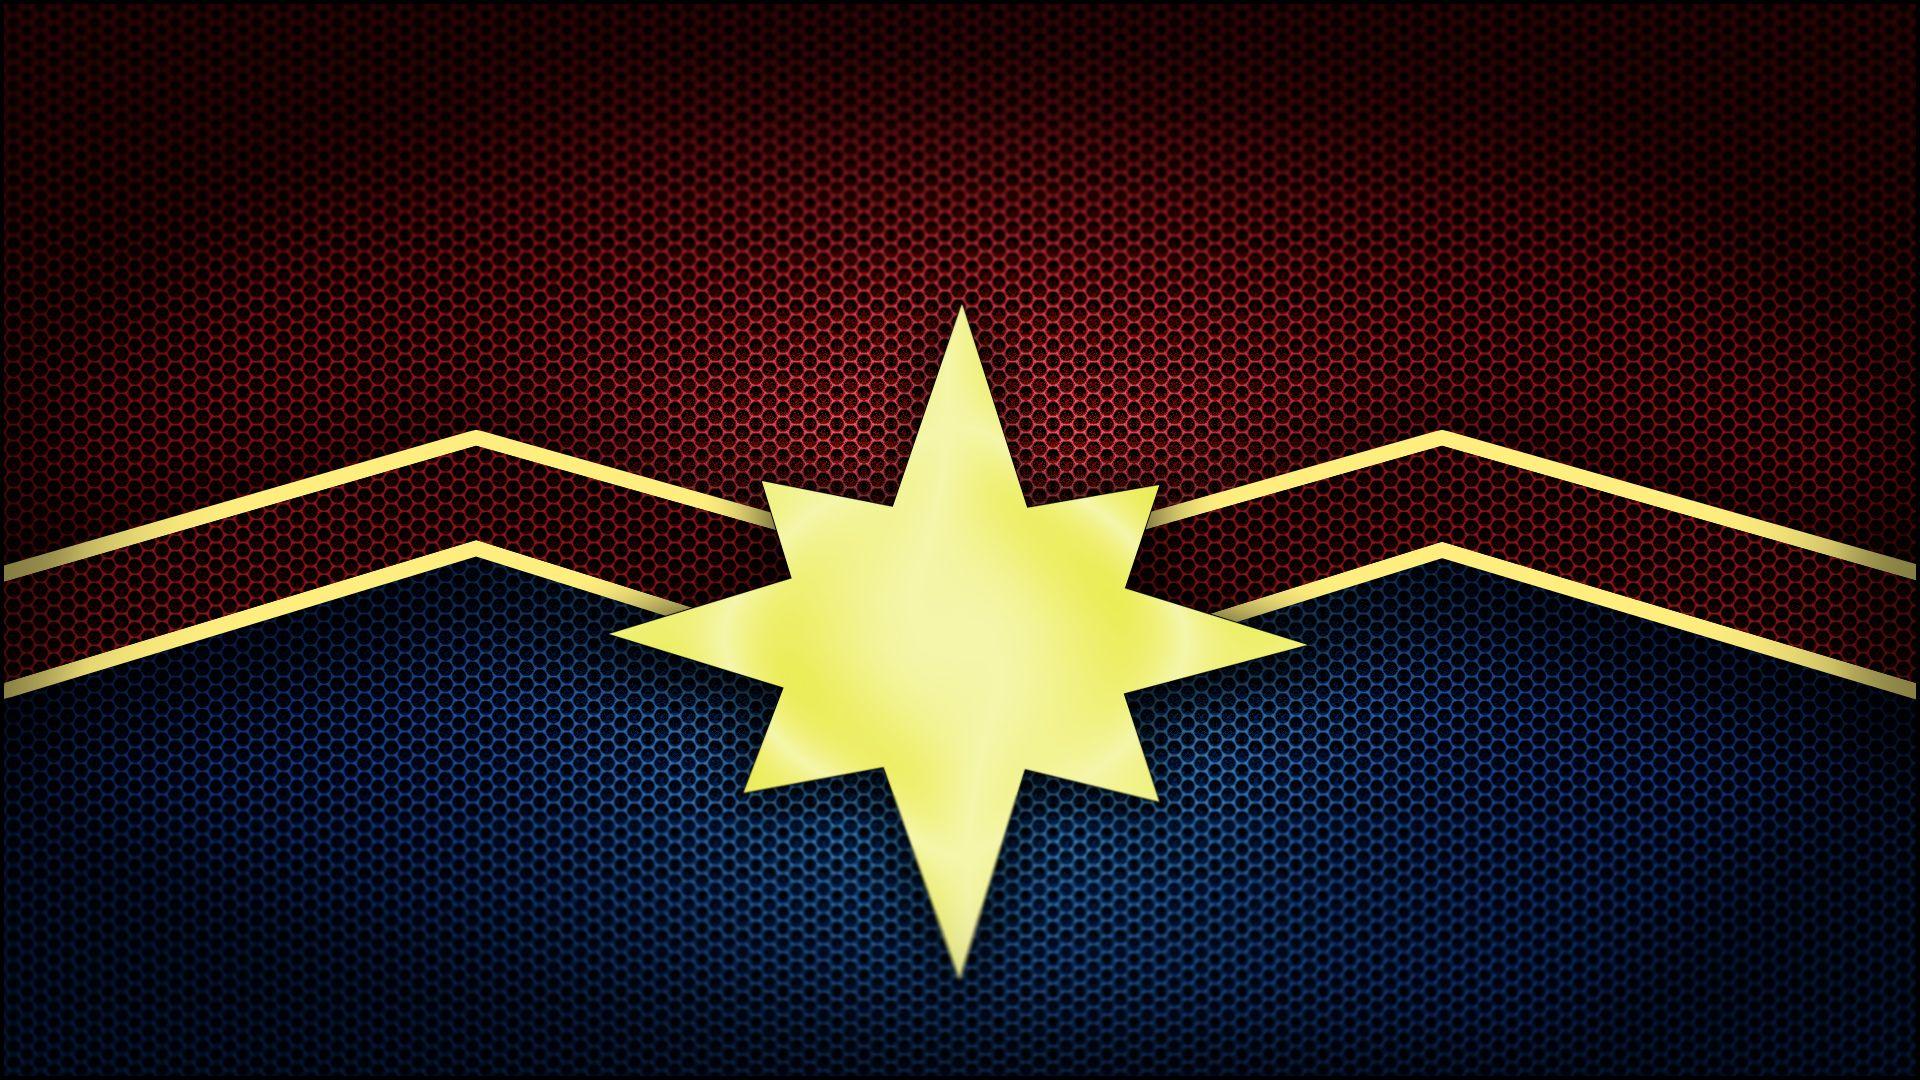 Captain Marvel Logo, HD Superheroes, 4k Wallpaper, Image